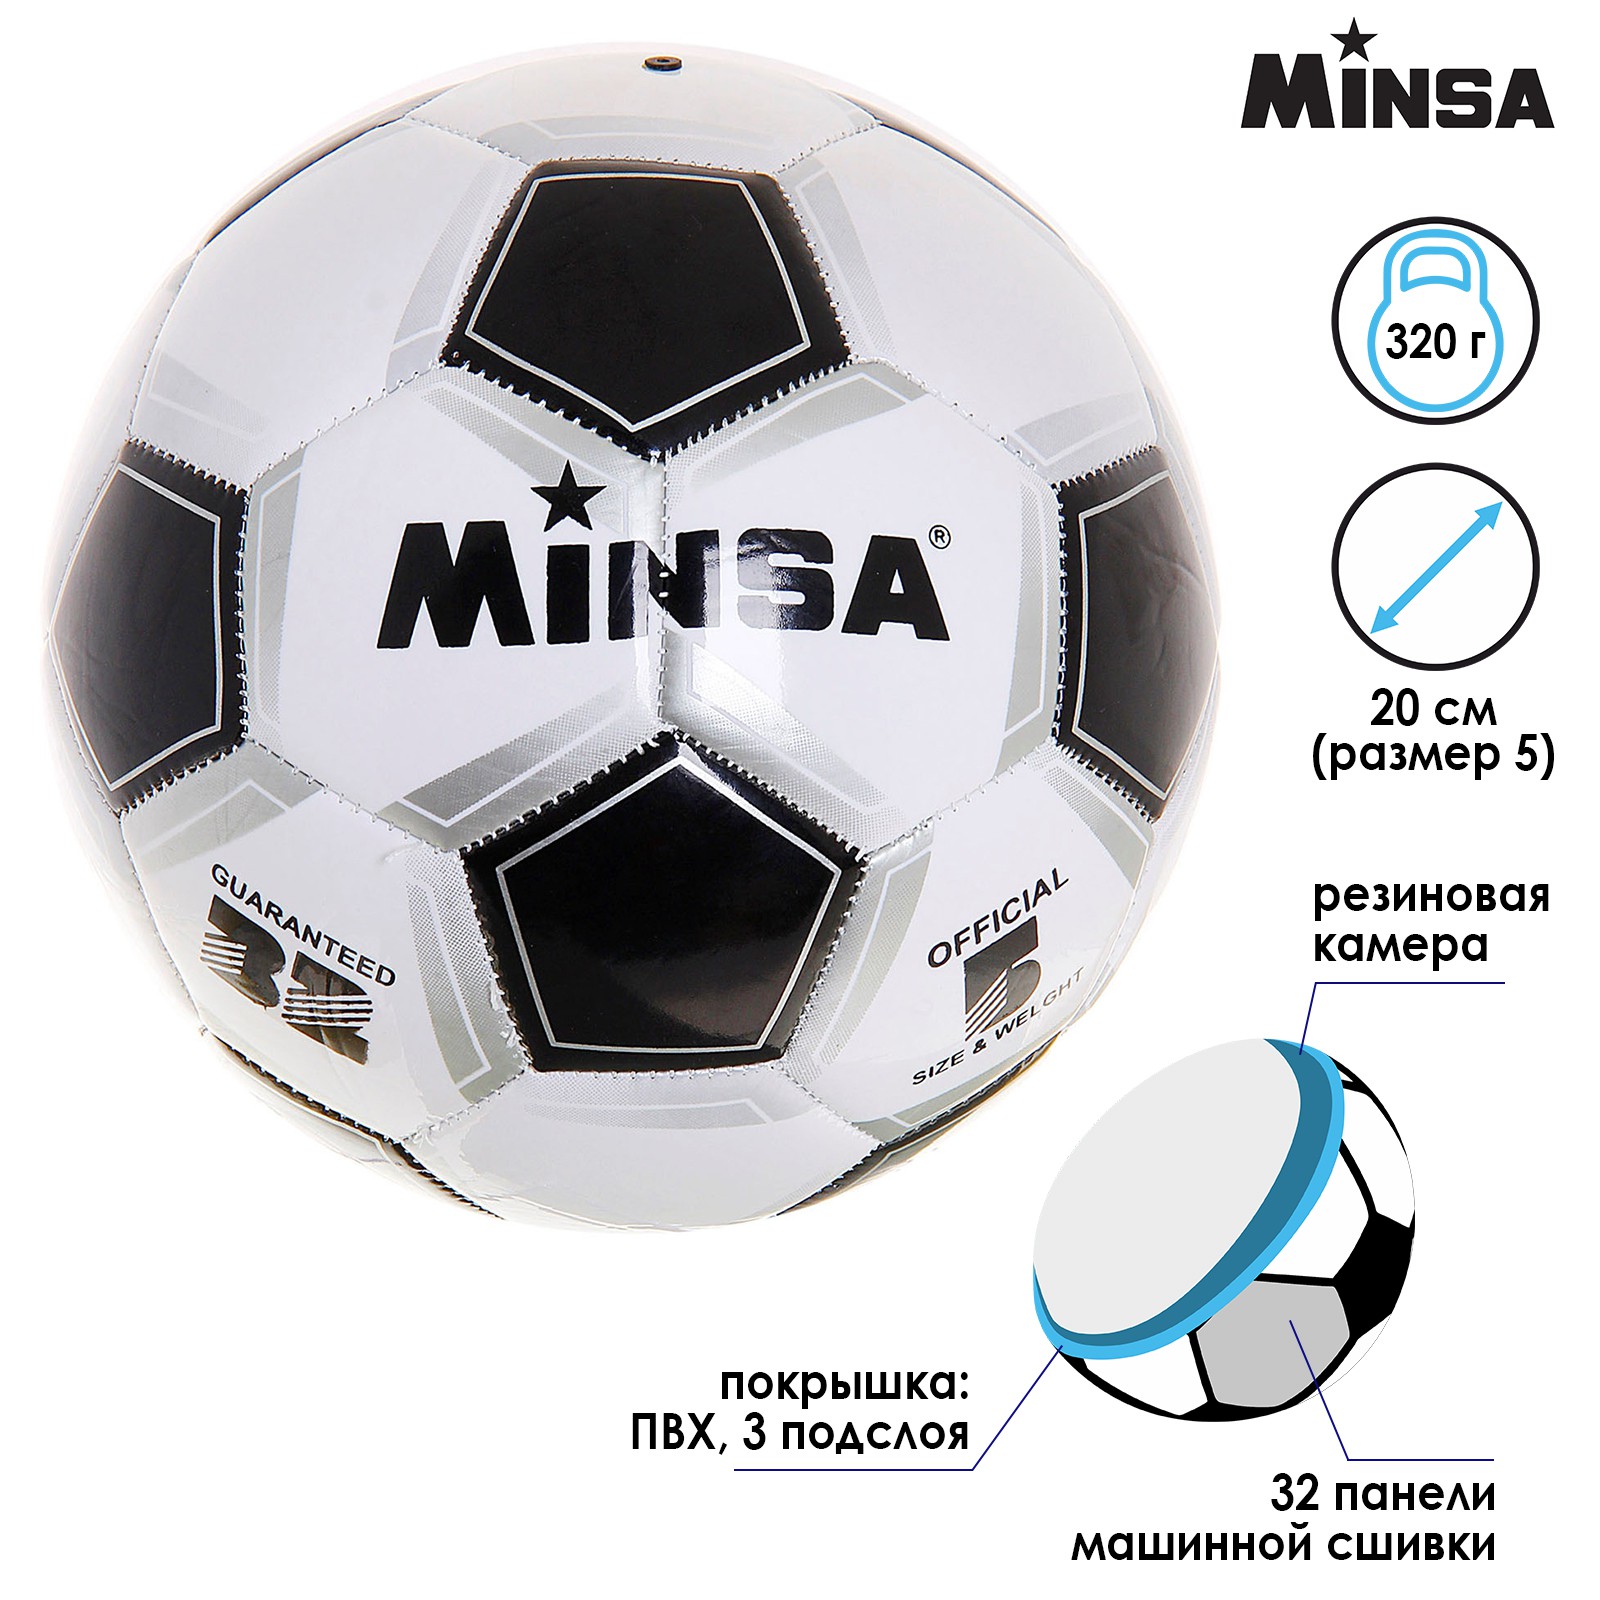 Мяч MINSA футбольный Classic. ПВХ. машинная сшивка. 32 панели. размер 5. 320 г - фото 2